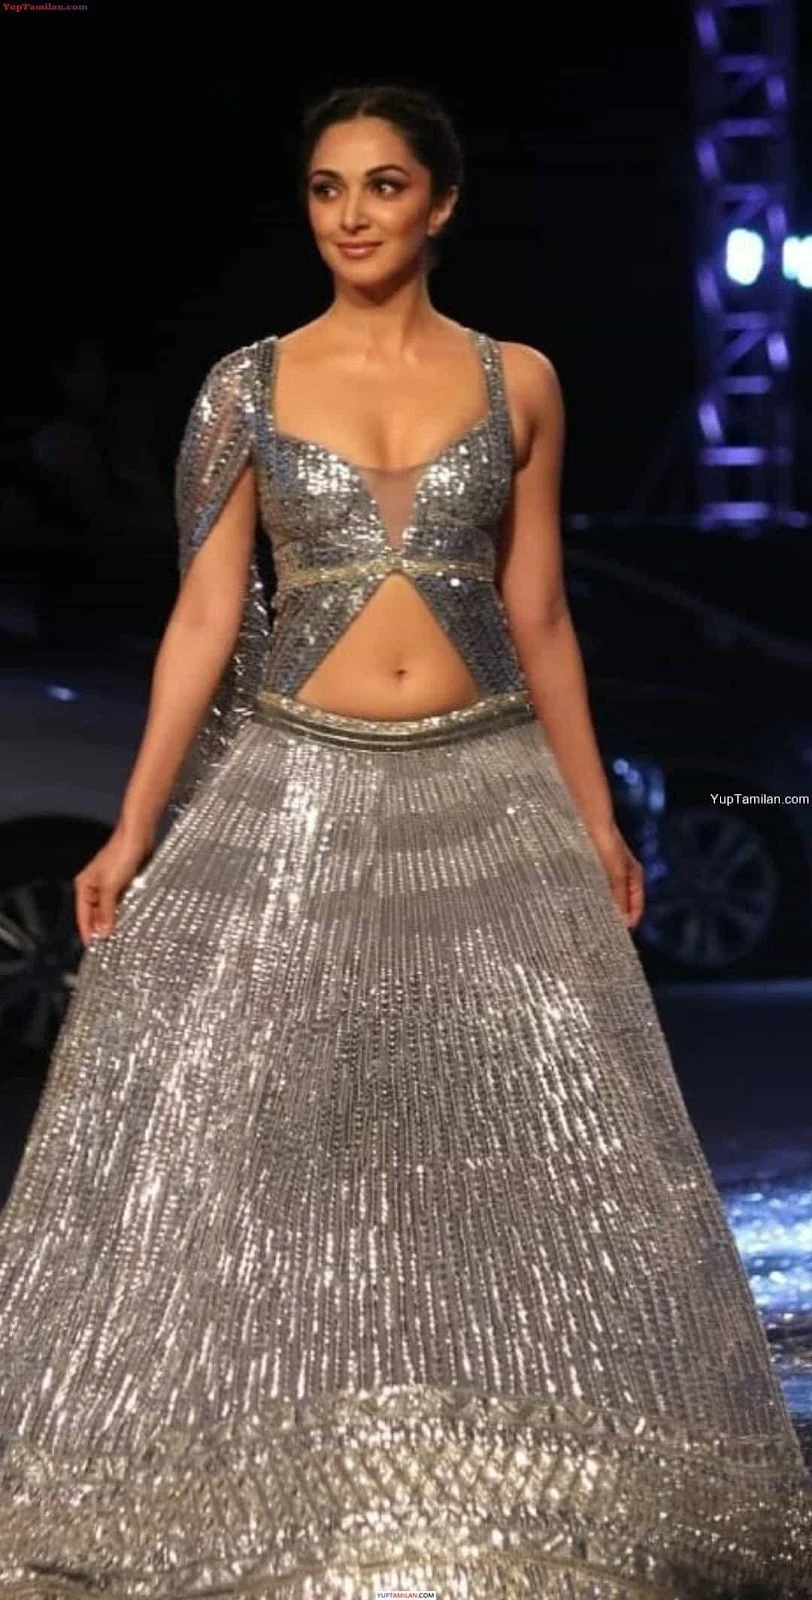 Kiara Advani Hot Navel Show - Sexy Abs Pics